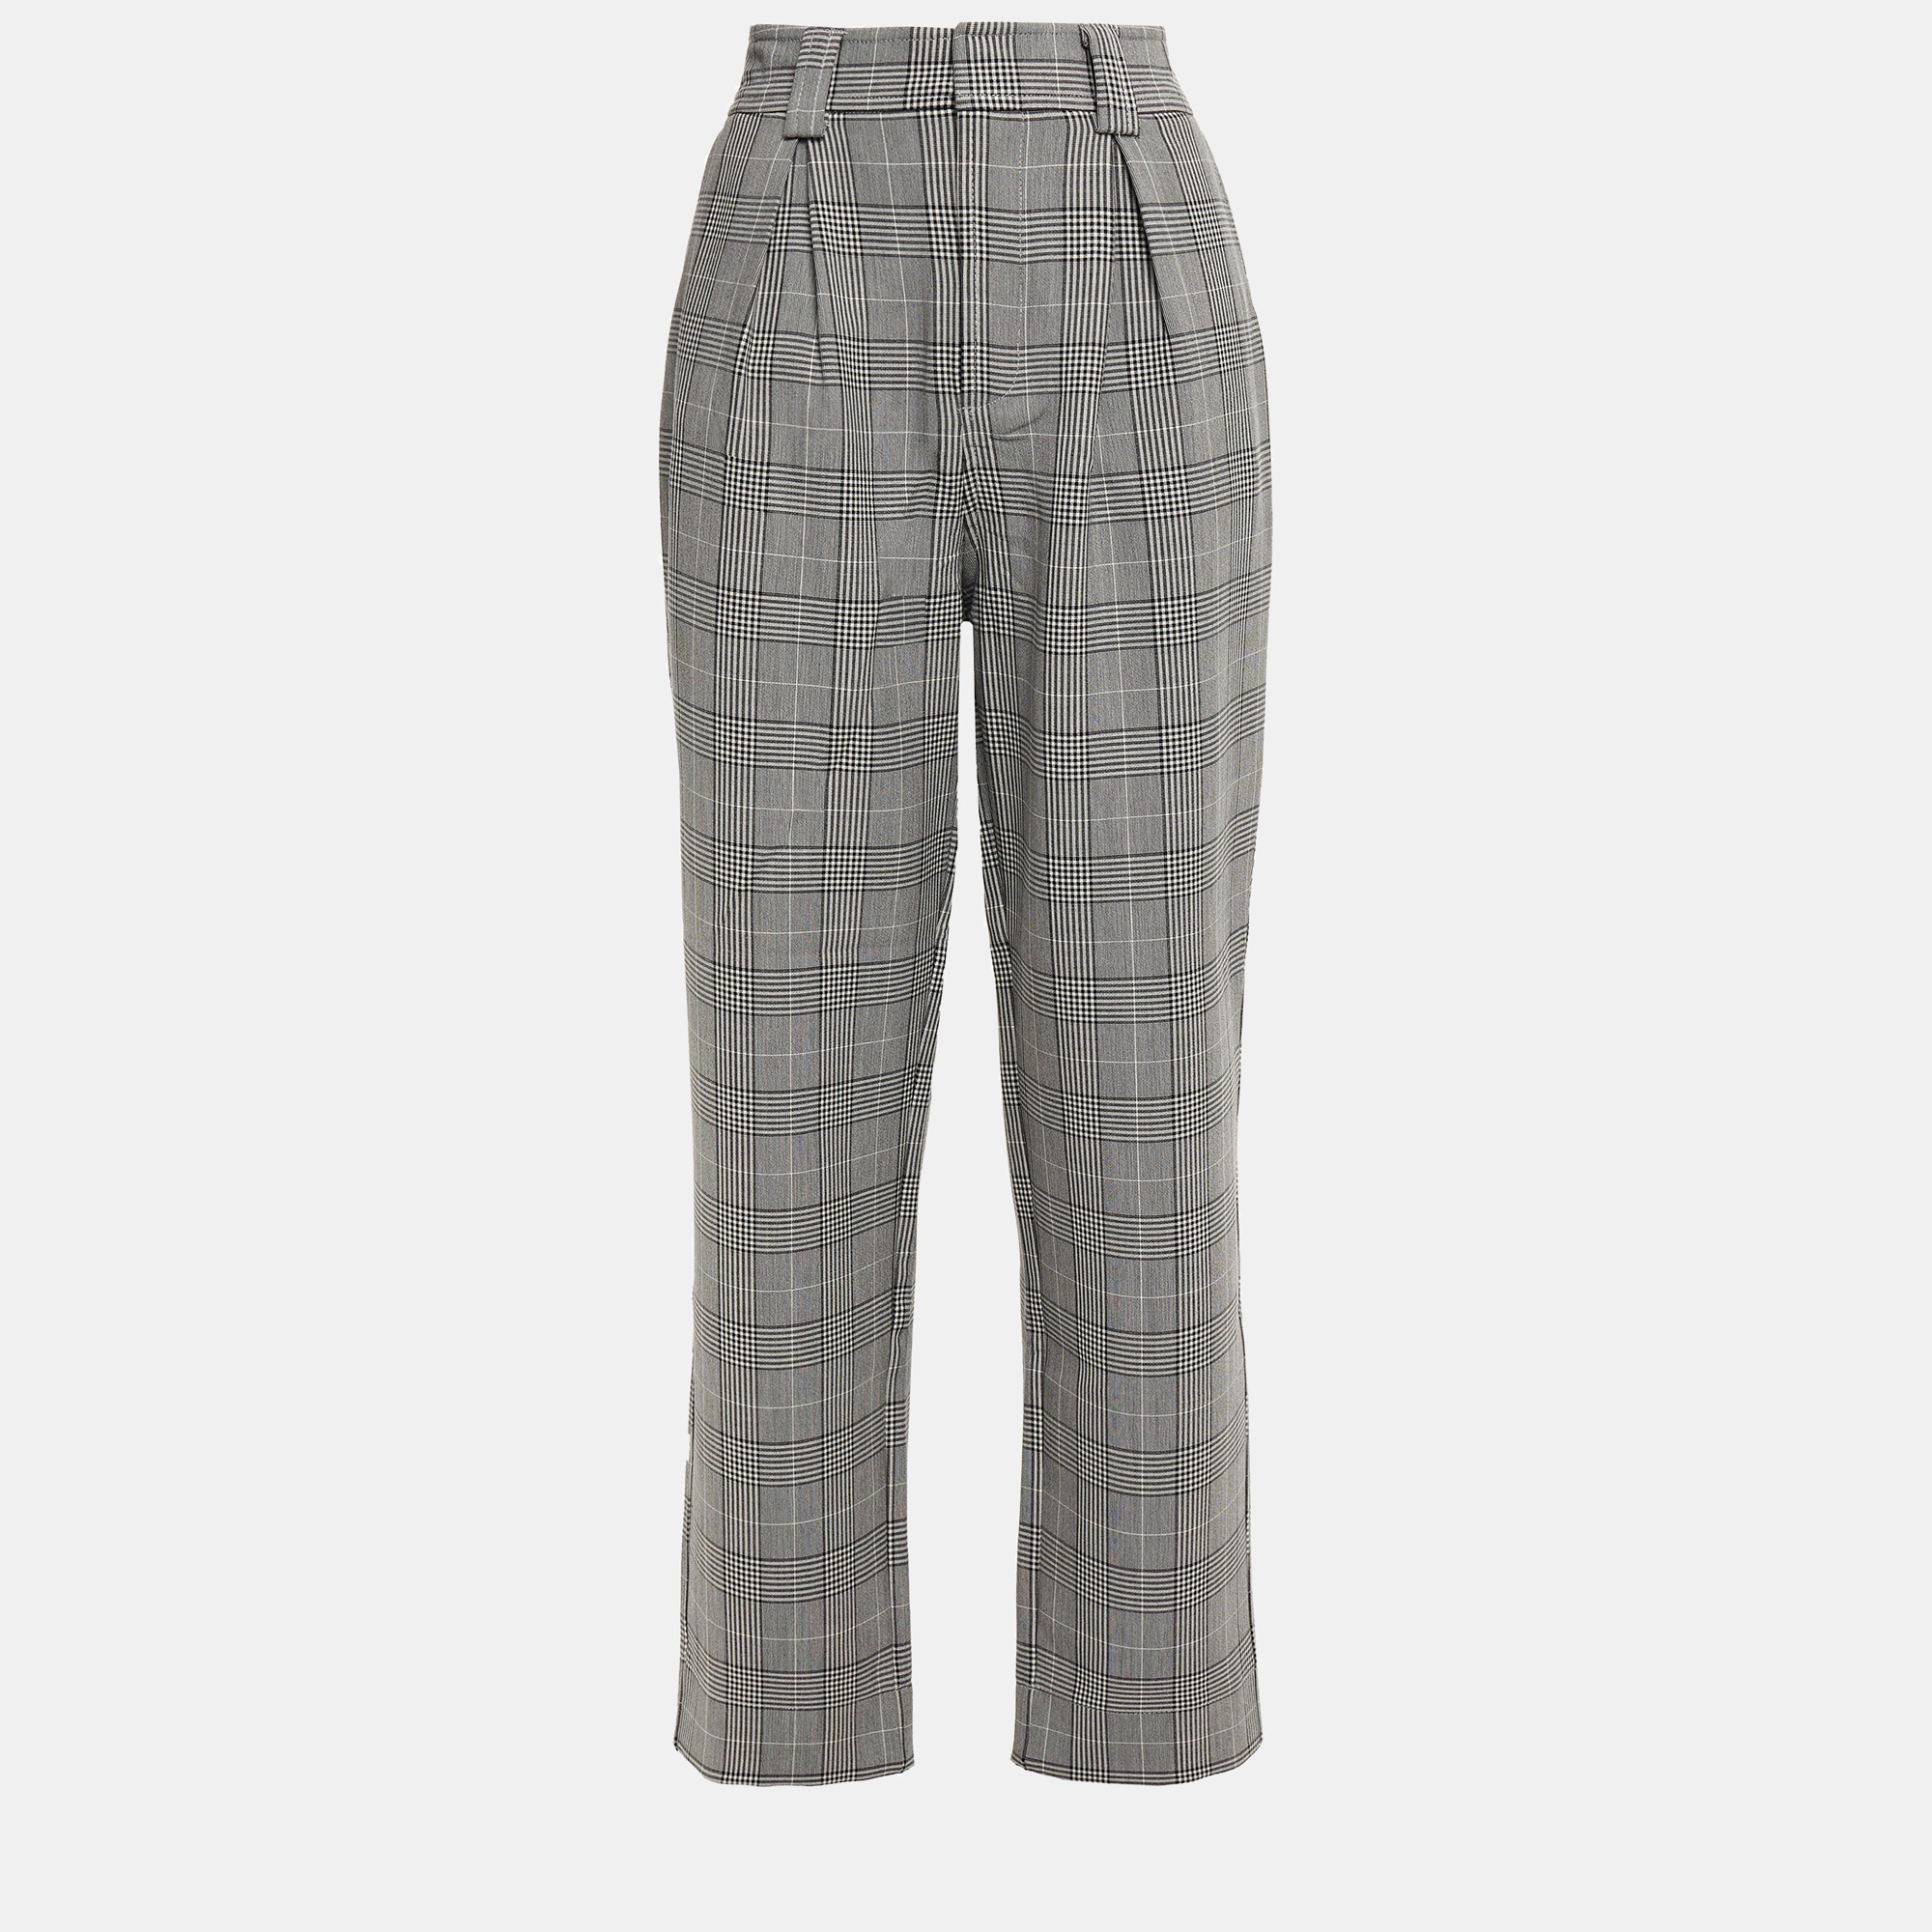 Ganni grey/black checked crepe trousers m (eu 38)